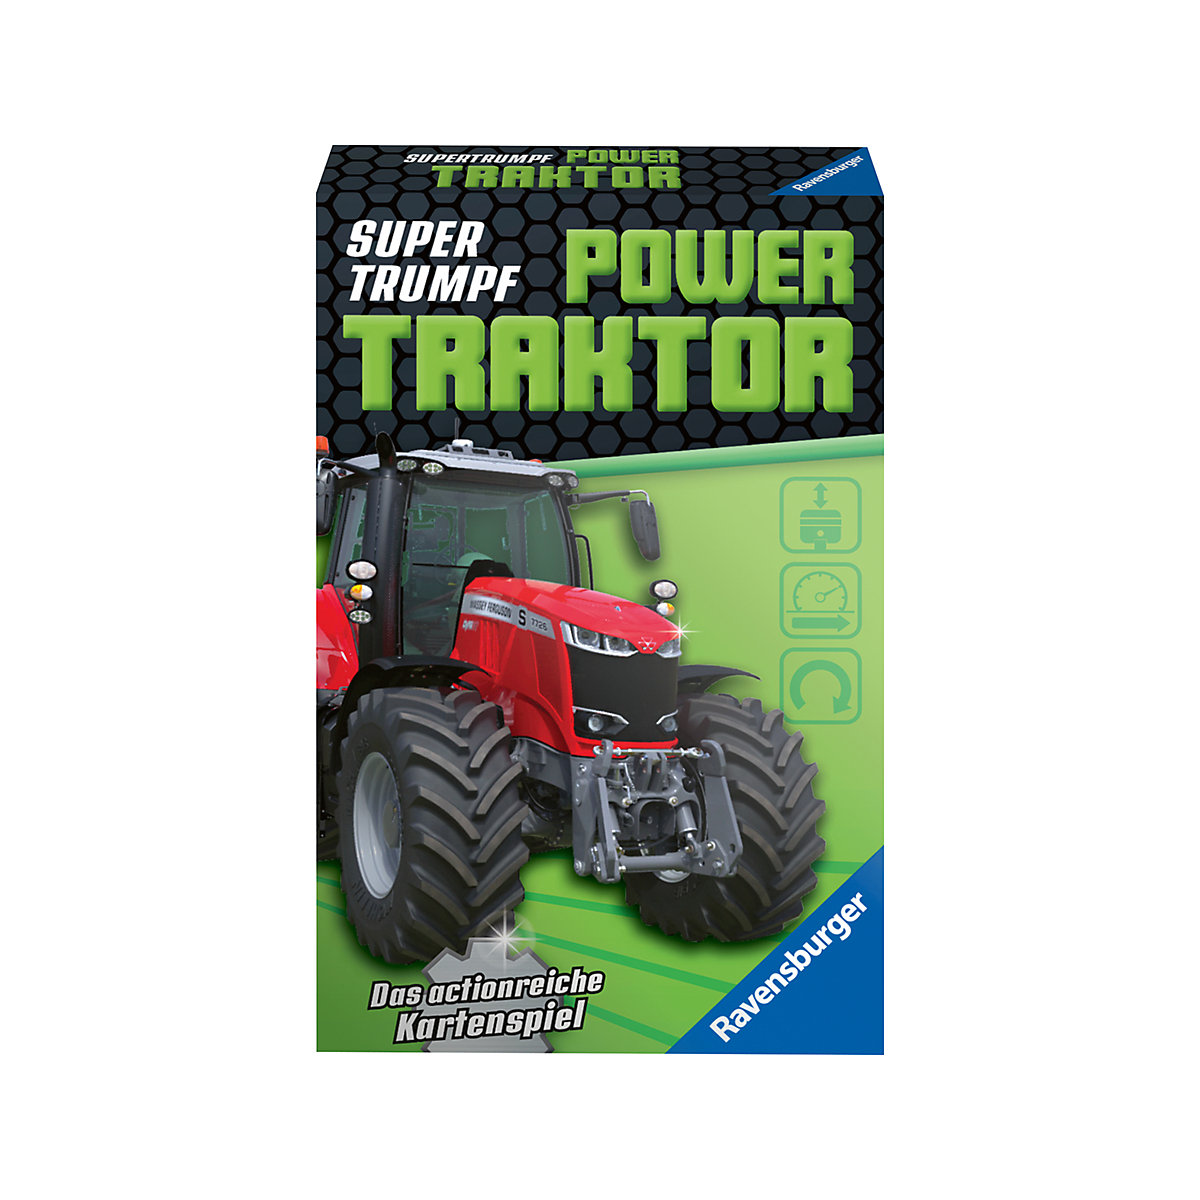 Ravensburger Power Traktor (Kartenspiel)